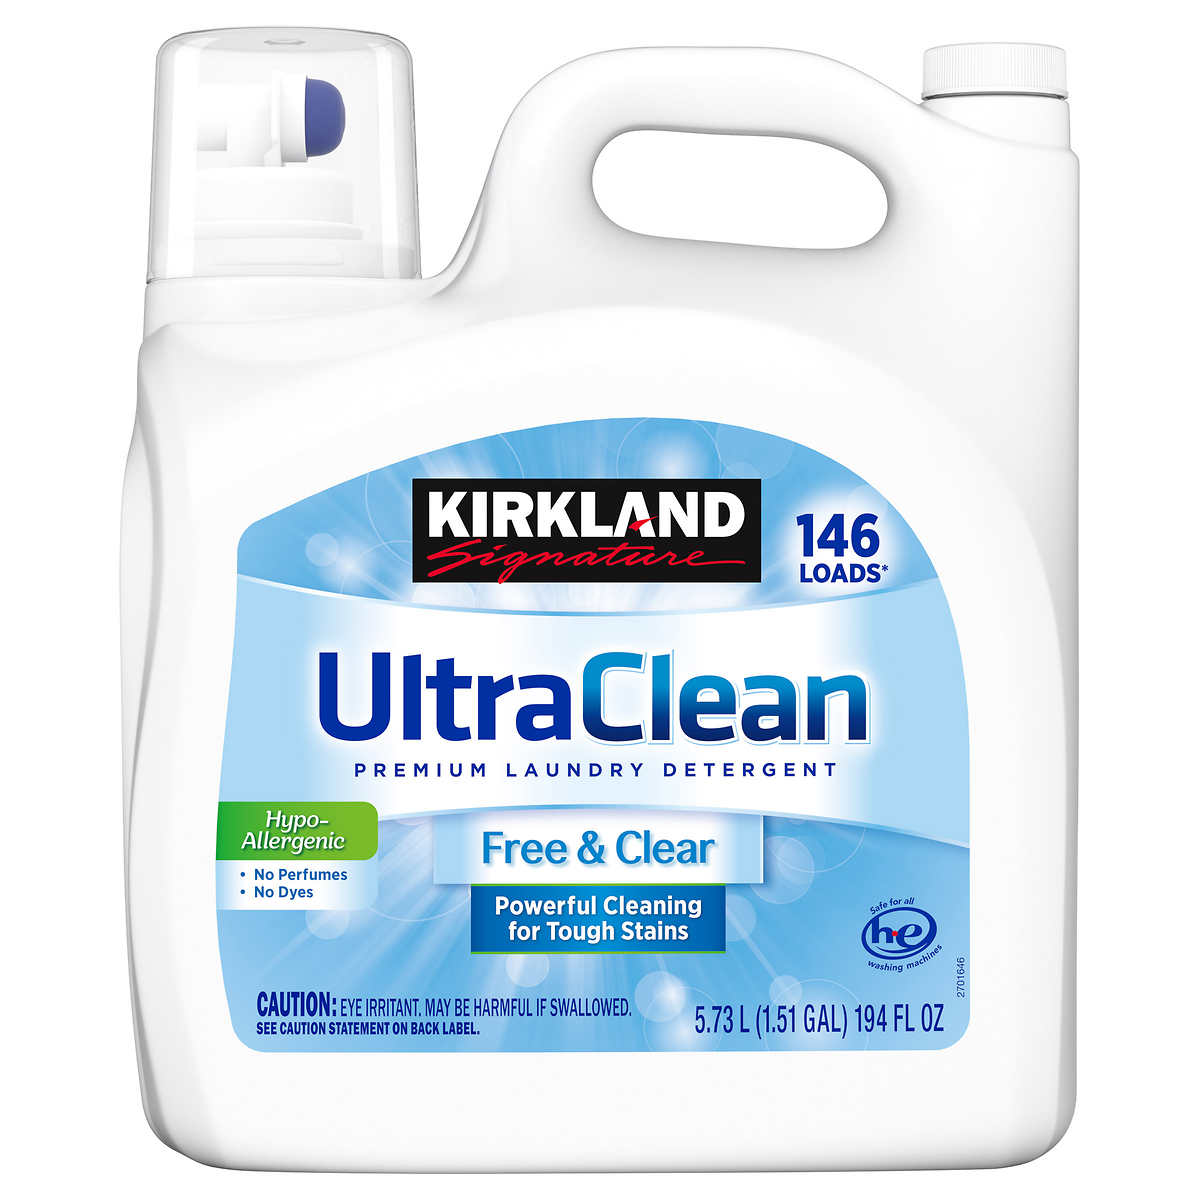 Kirkland Signature Ultra Clean Free & Clear HE Liquid Laundry Detergent 146 loads 194 fl oz